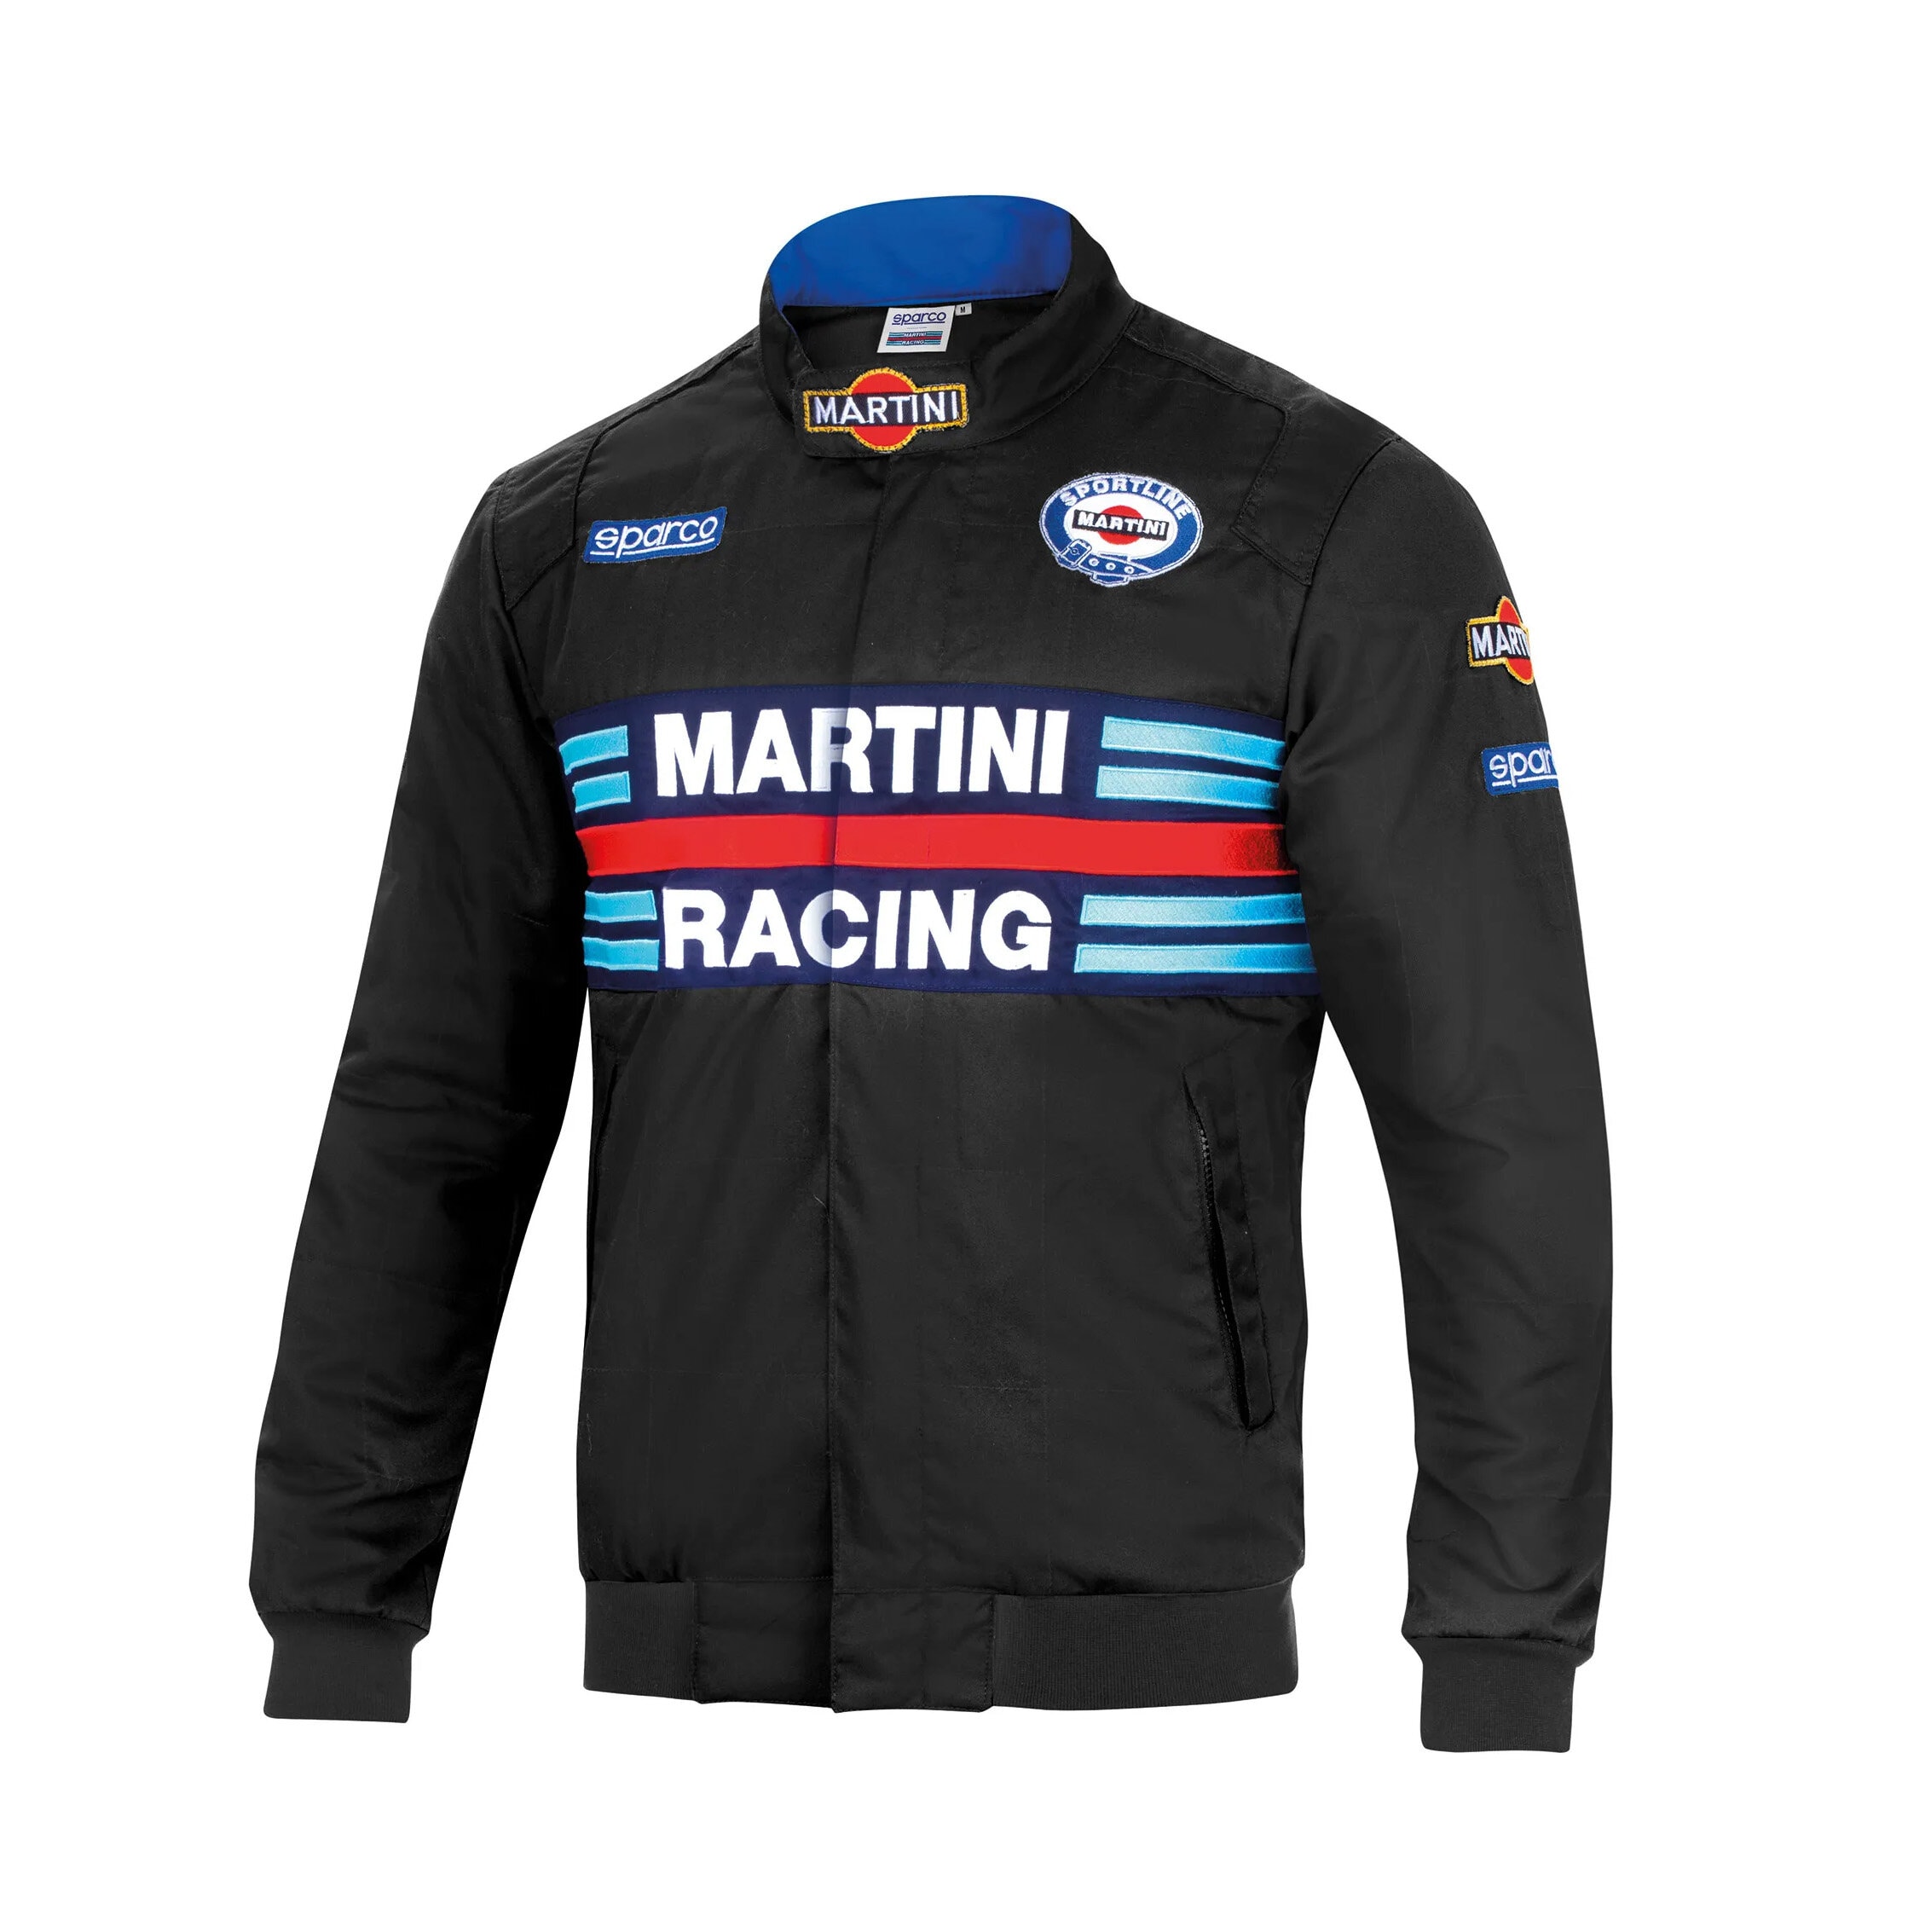 Jakke Martini Racing Bomber Sort